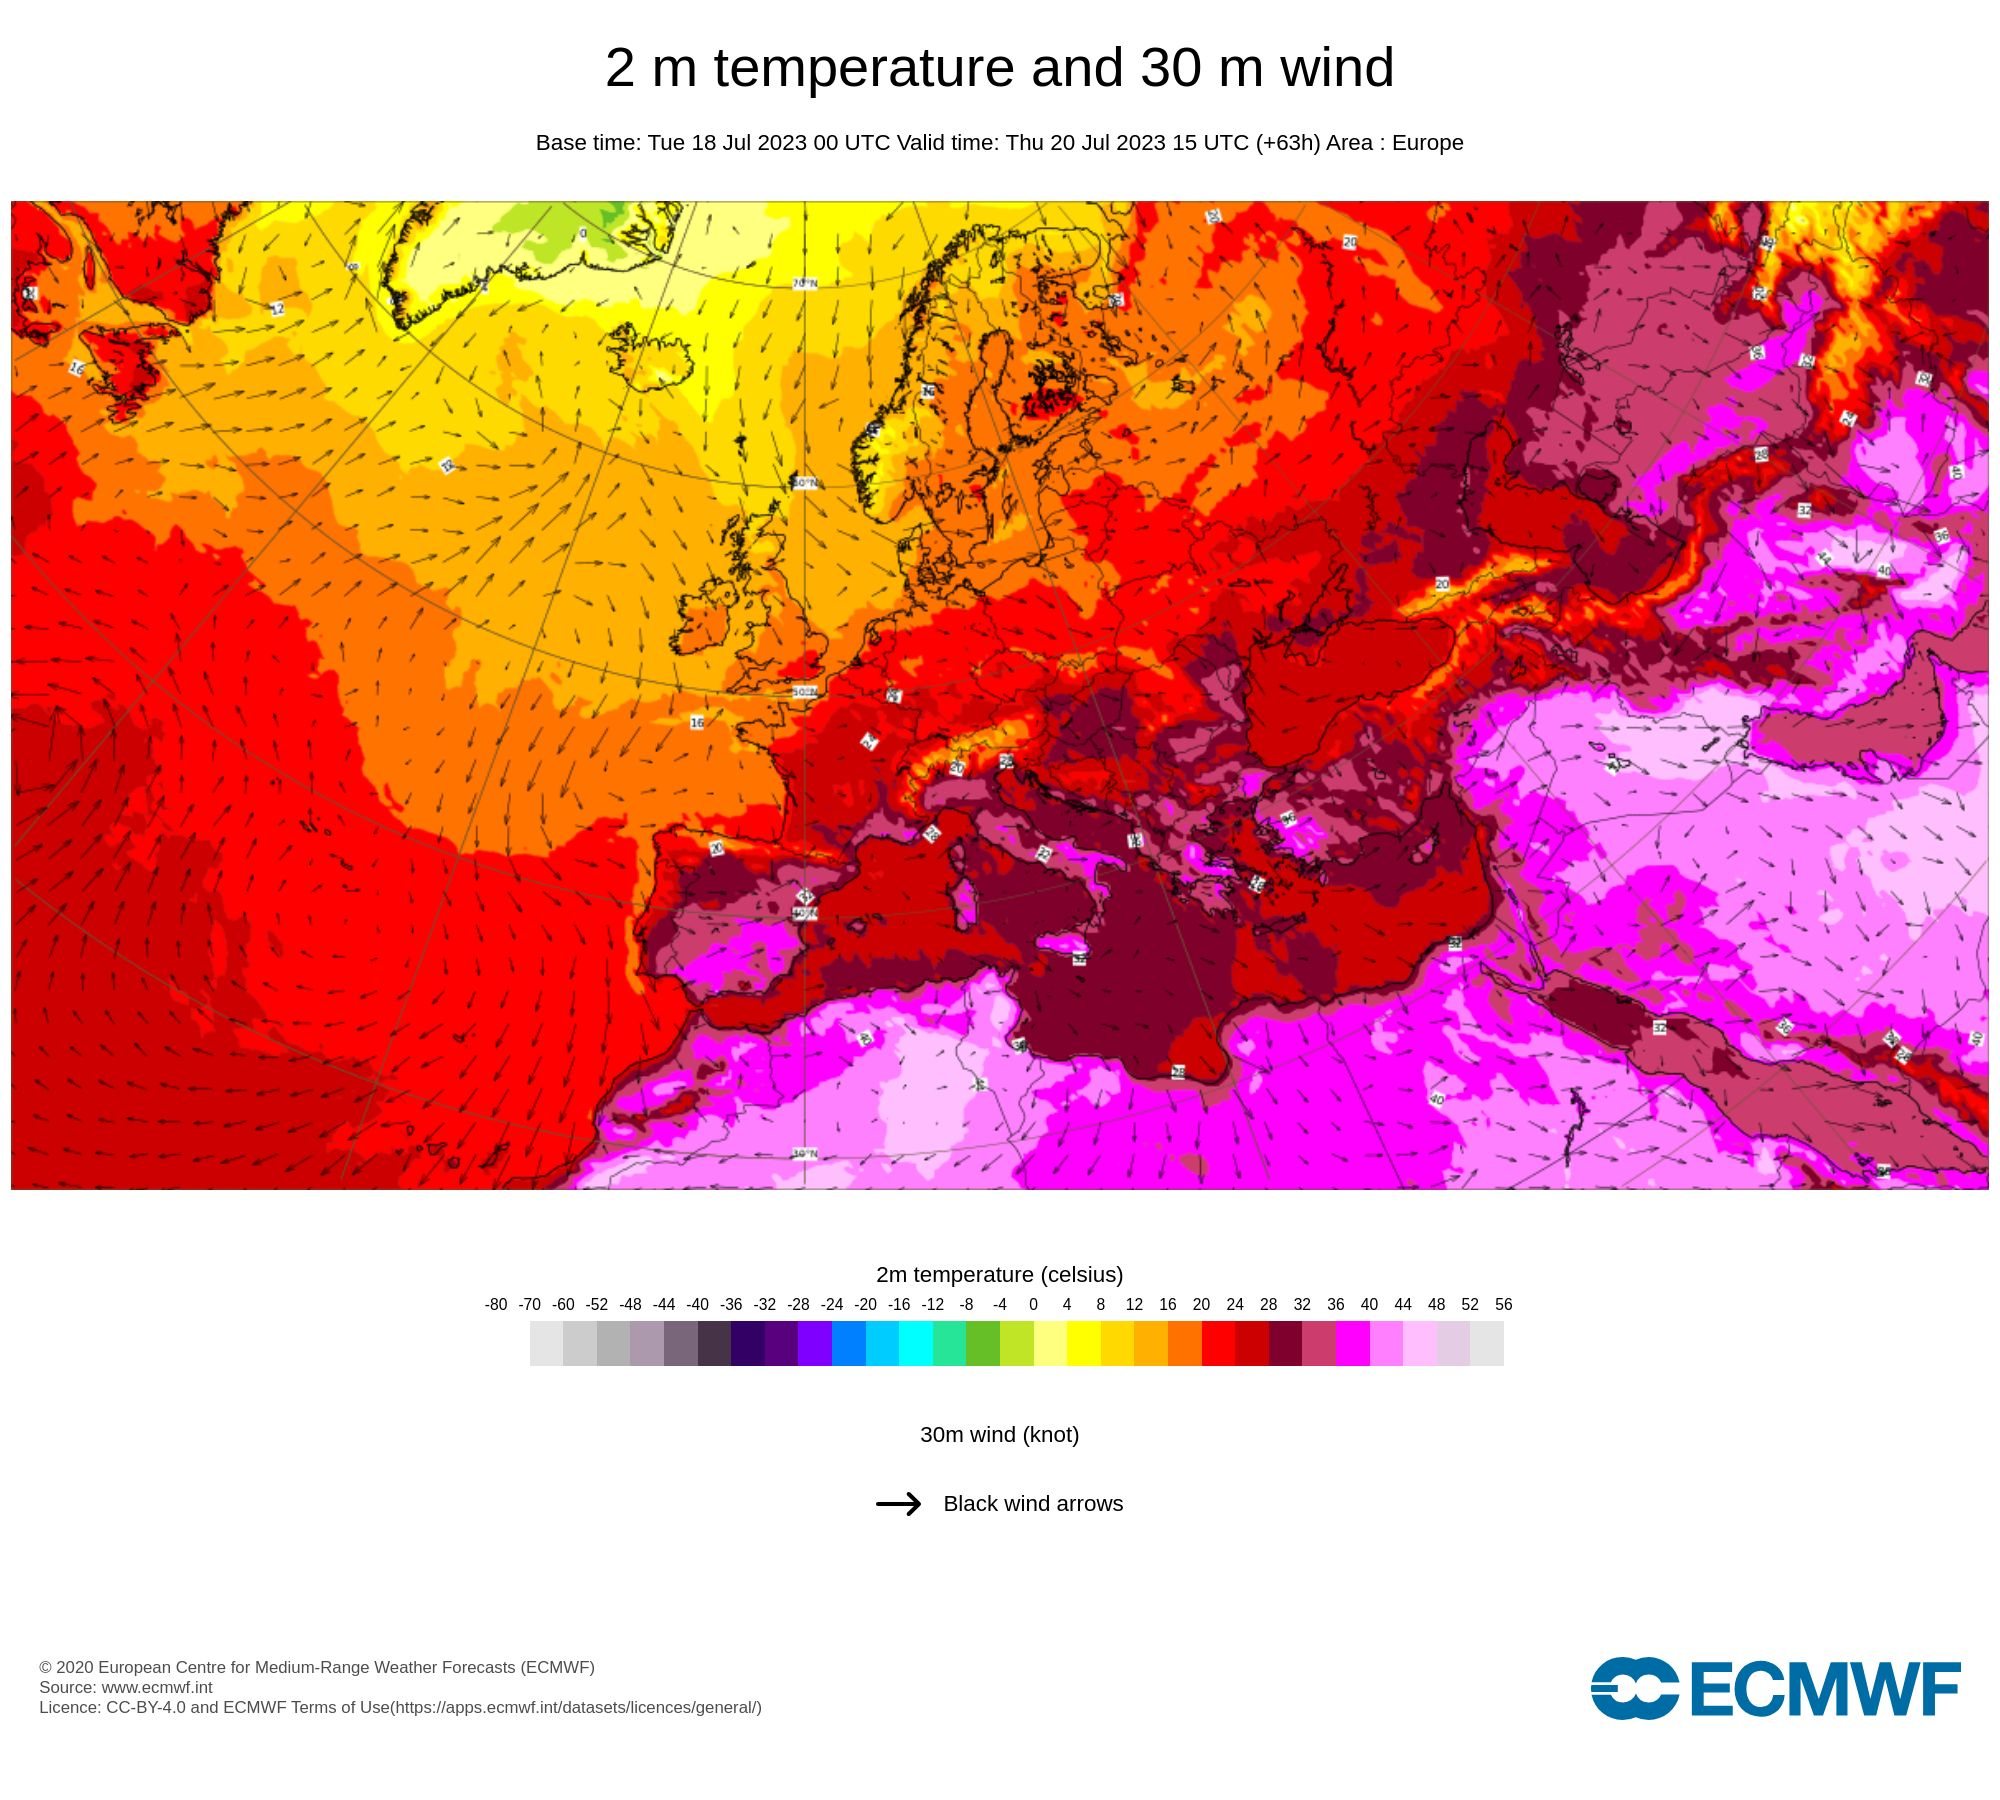 20 de julho de 2023: temperaturas às 16 horas (em Portugal continental)